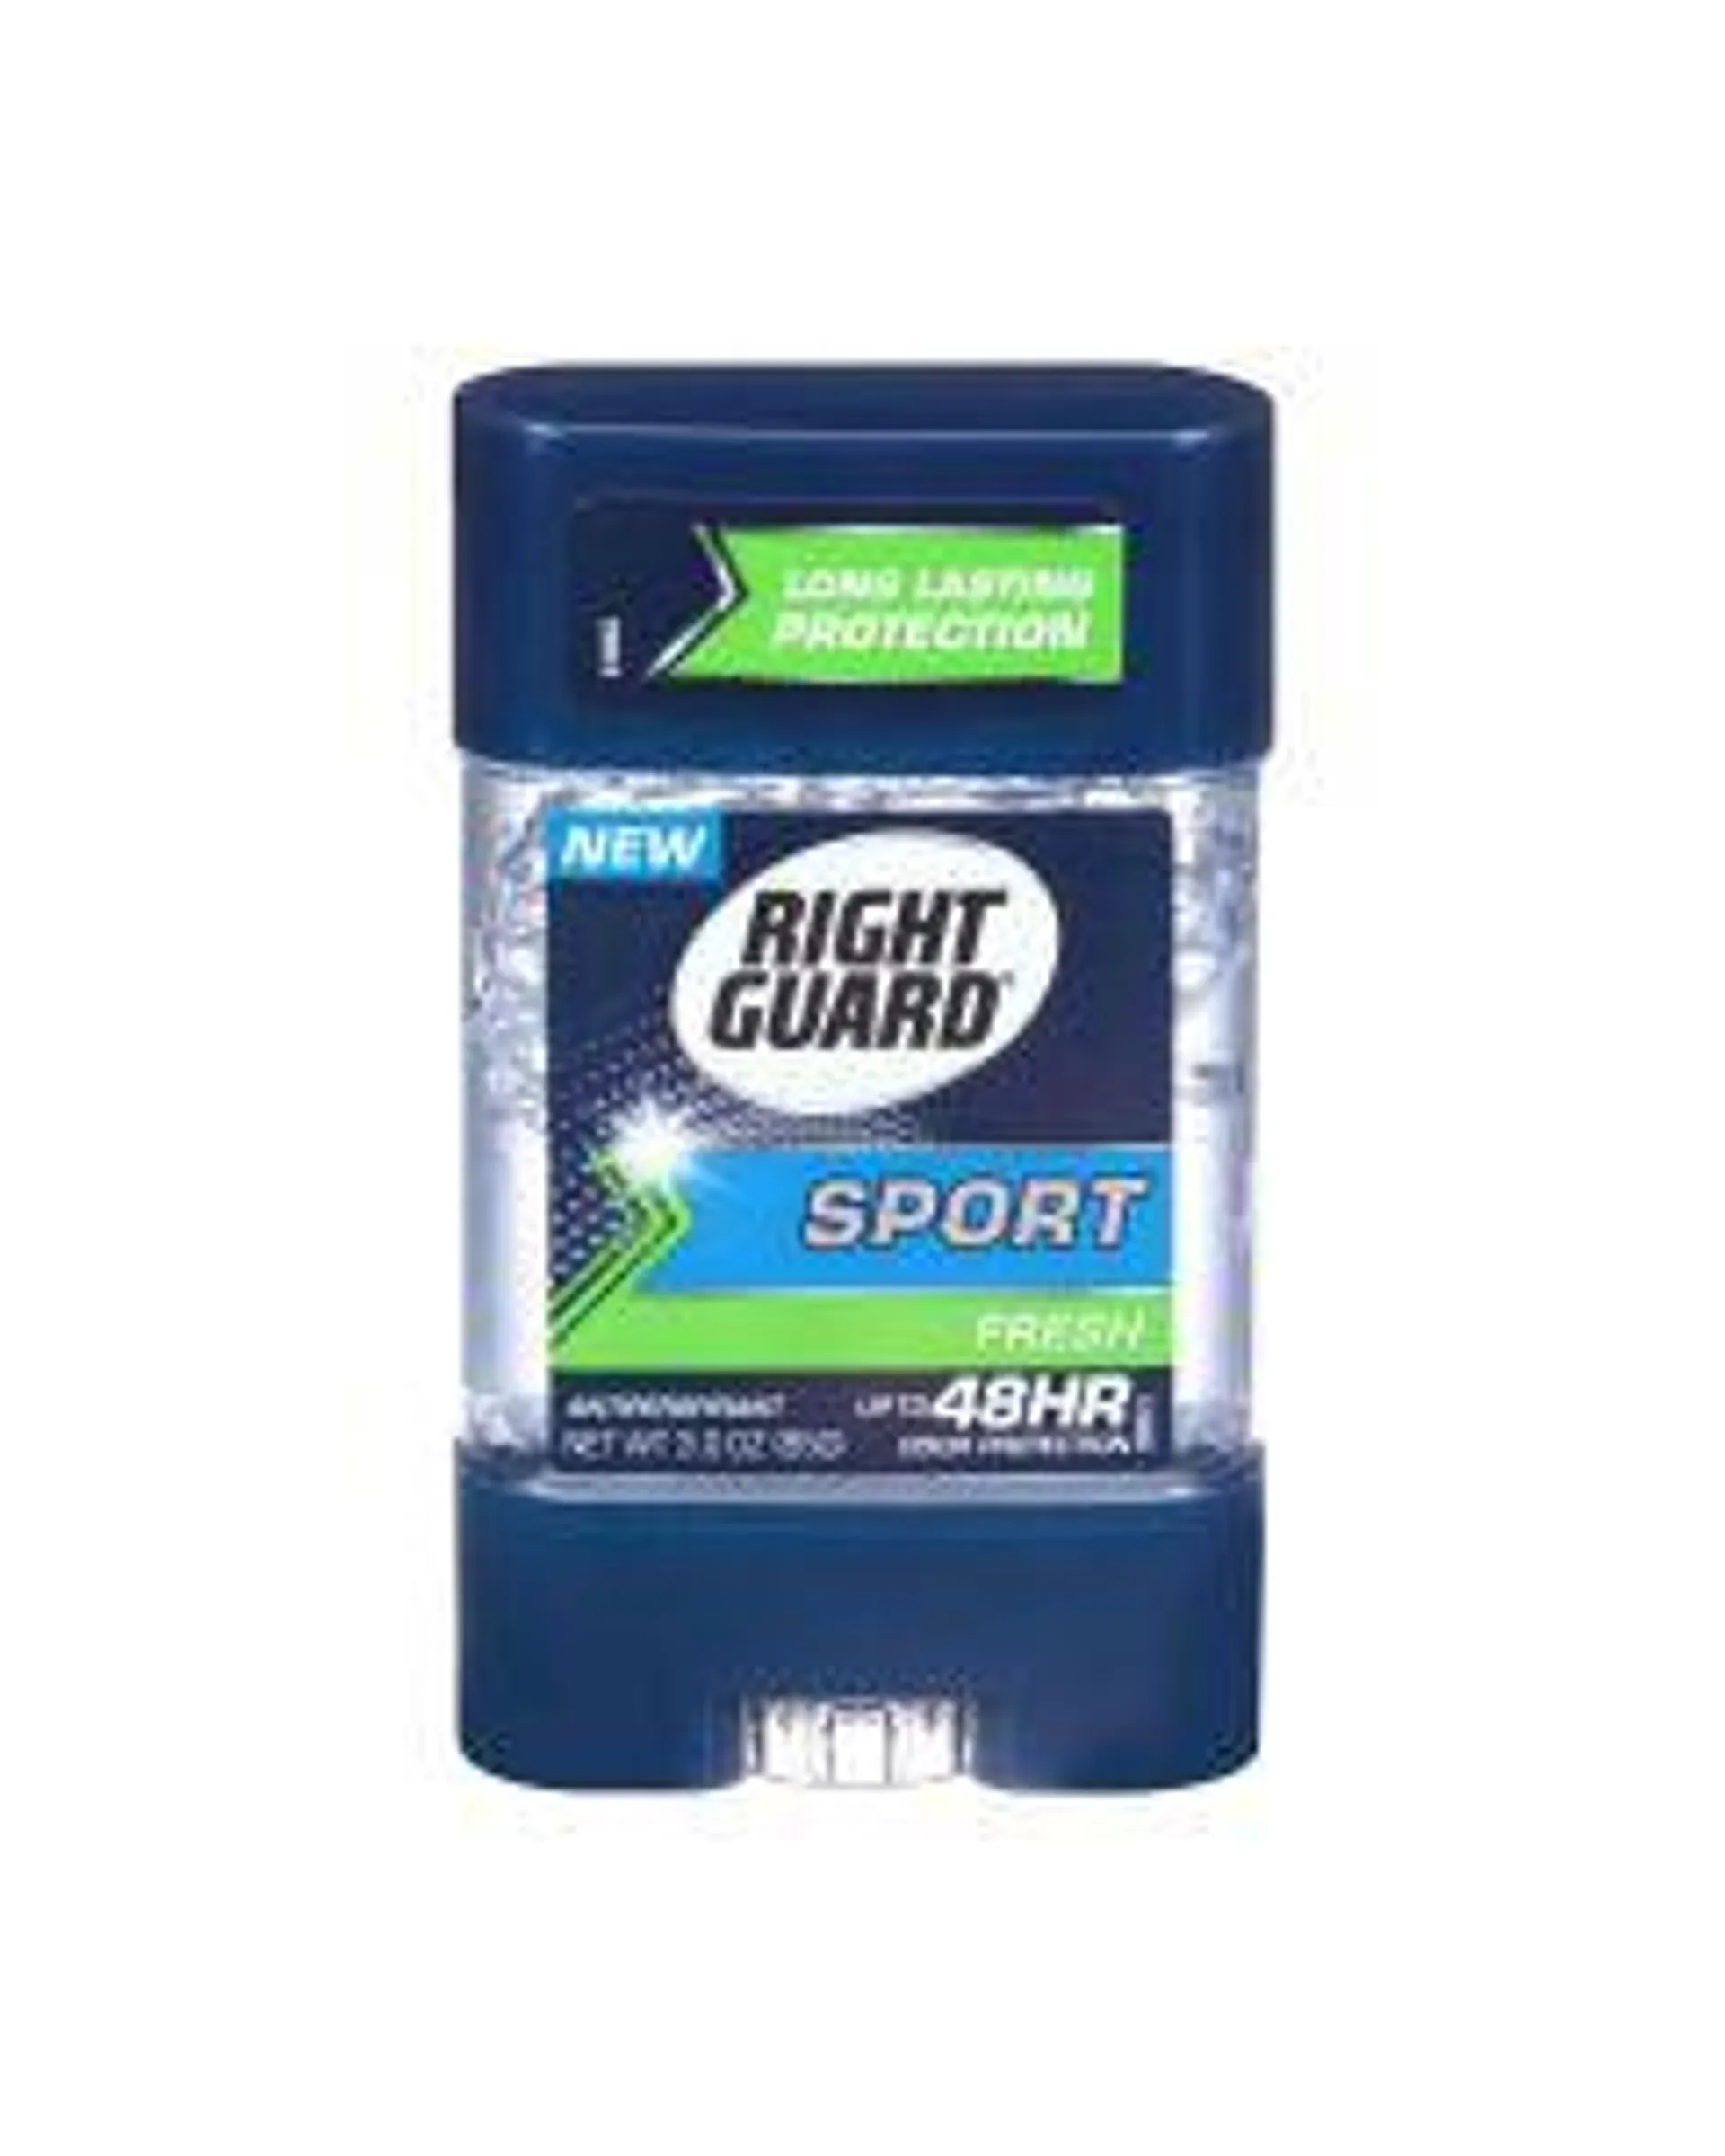 Right Guard Sport Antiperspirant Deodorant Gel - Fresh, 3 Oz